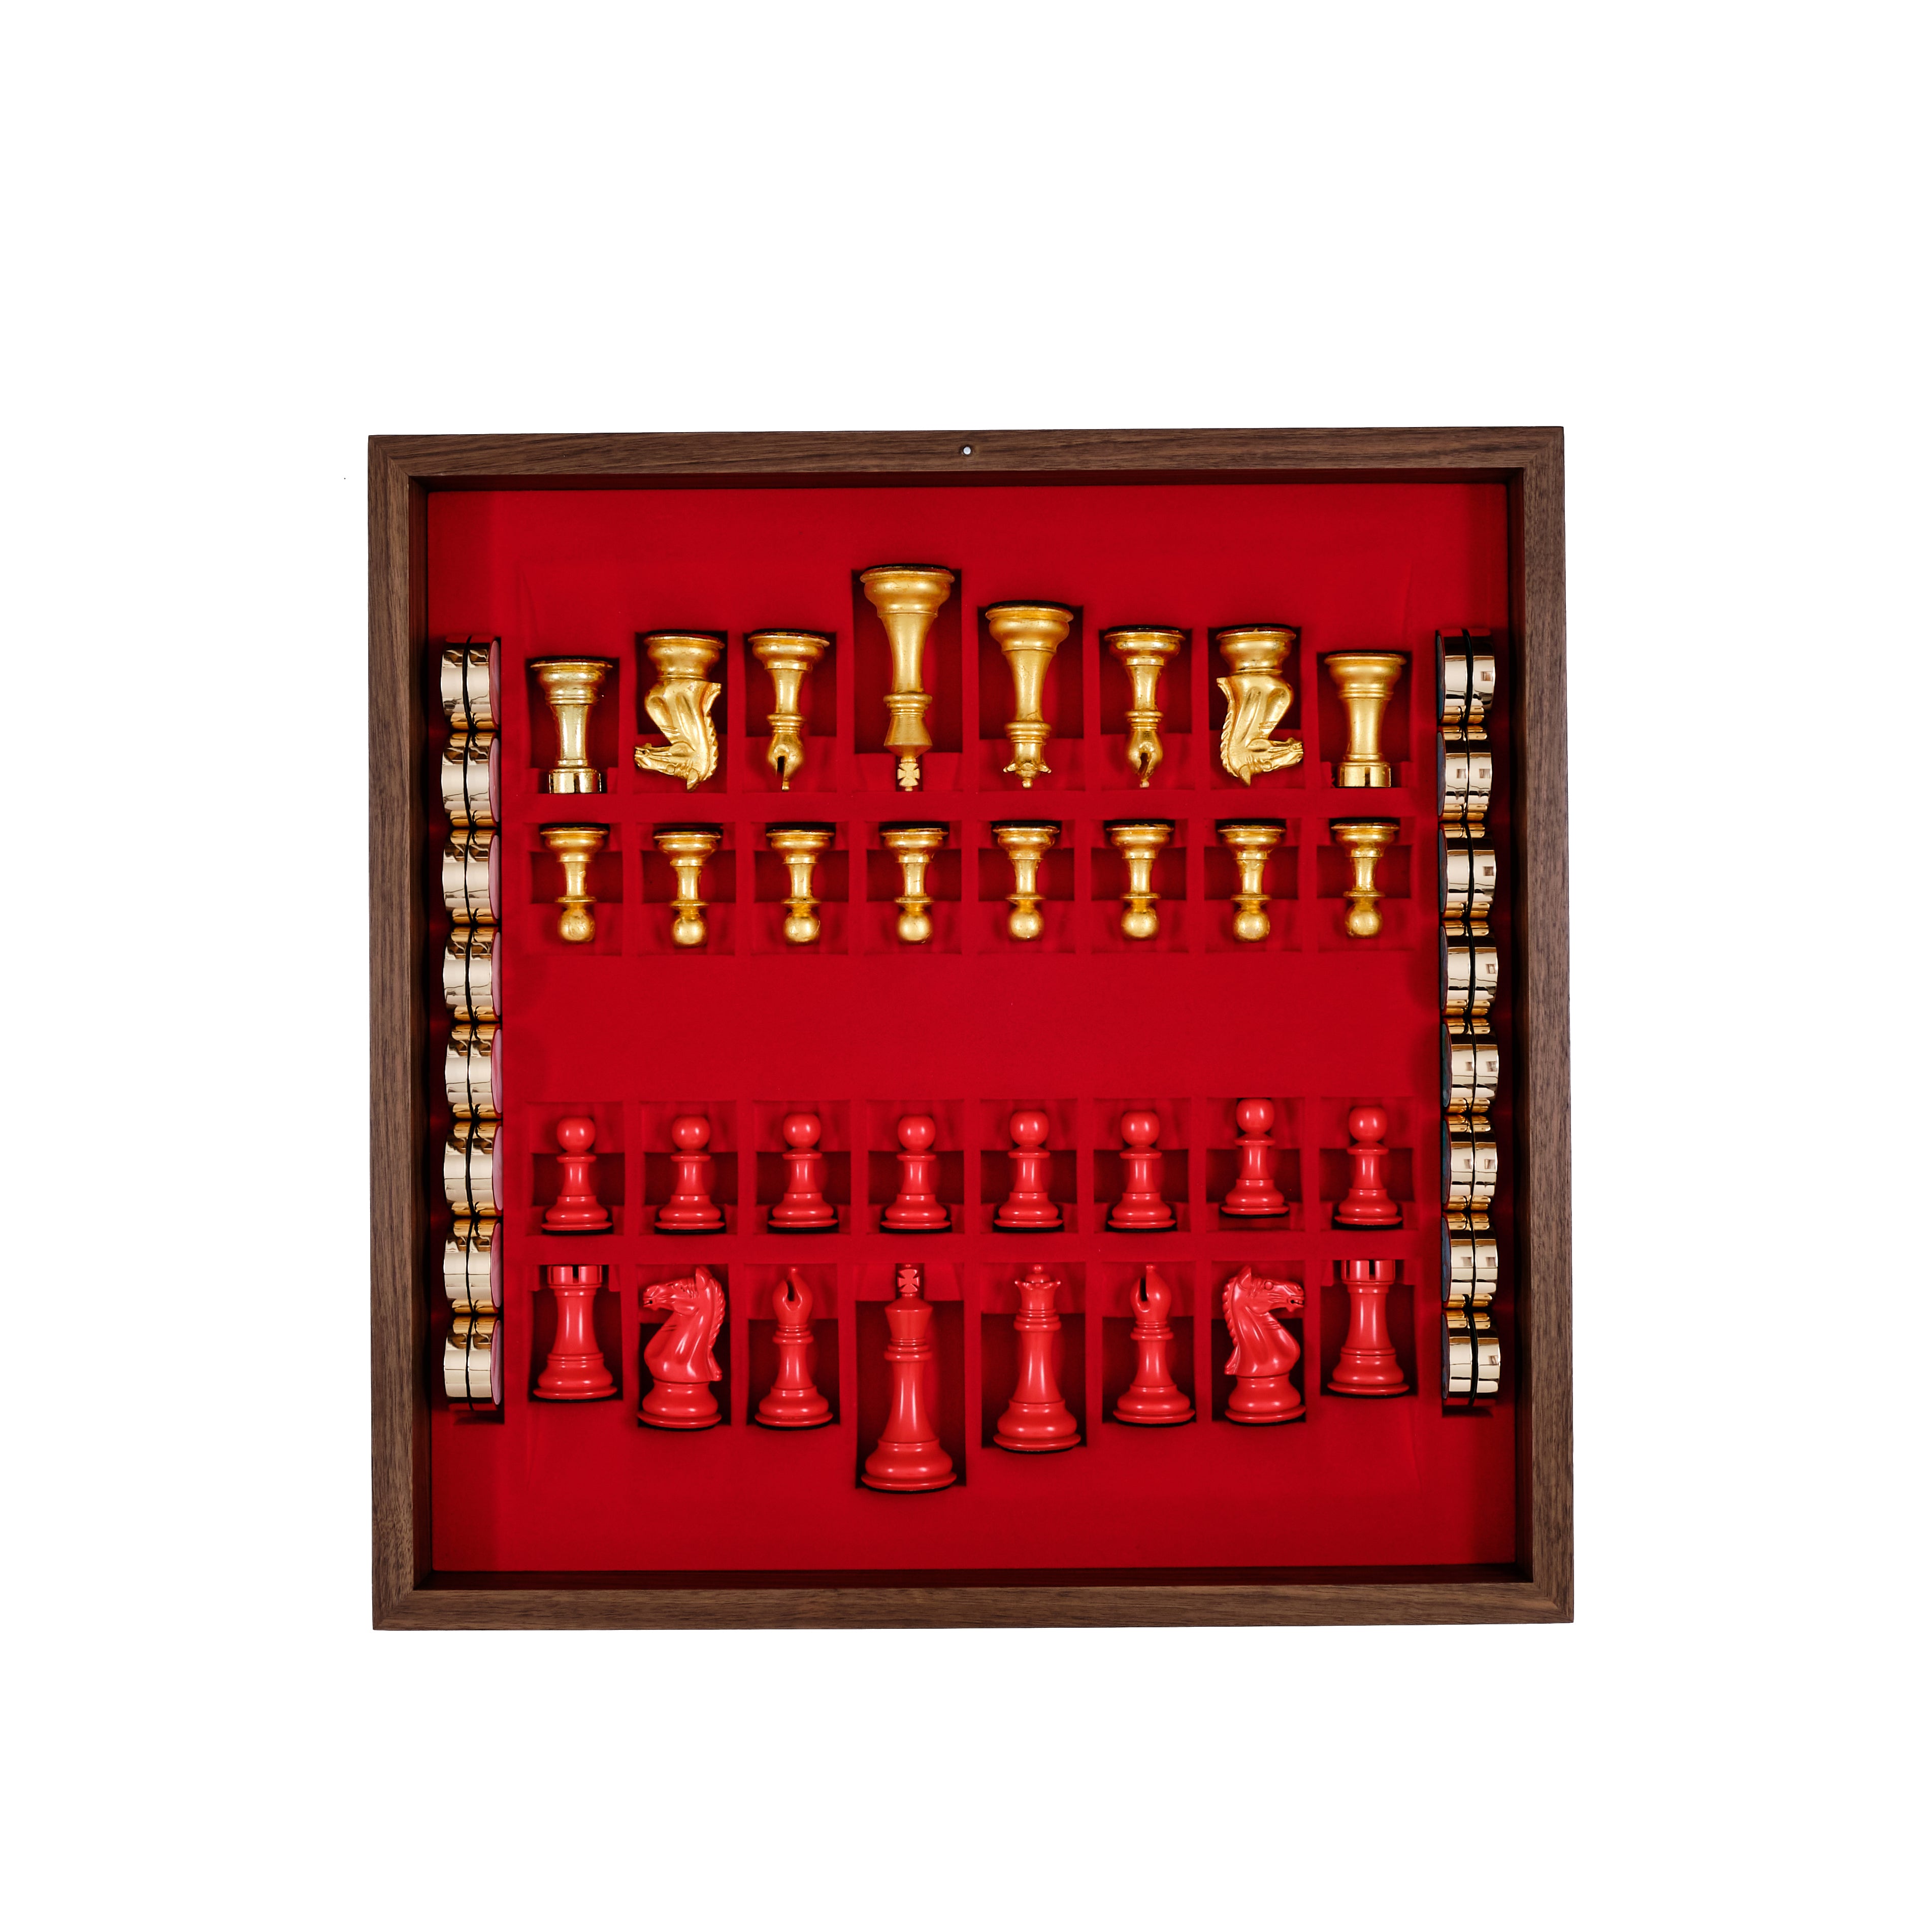 Alexandra Llewellyn Eden Rock - St Barths Chess Board - Oetker Collection Hotels Boutique